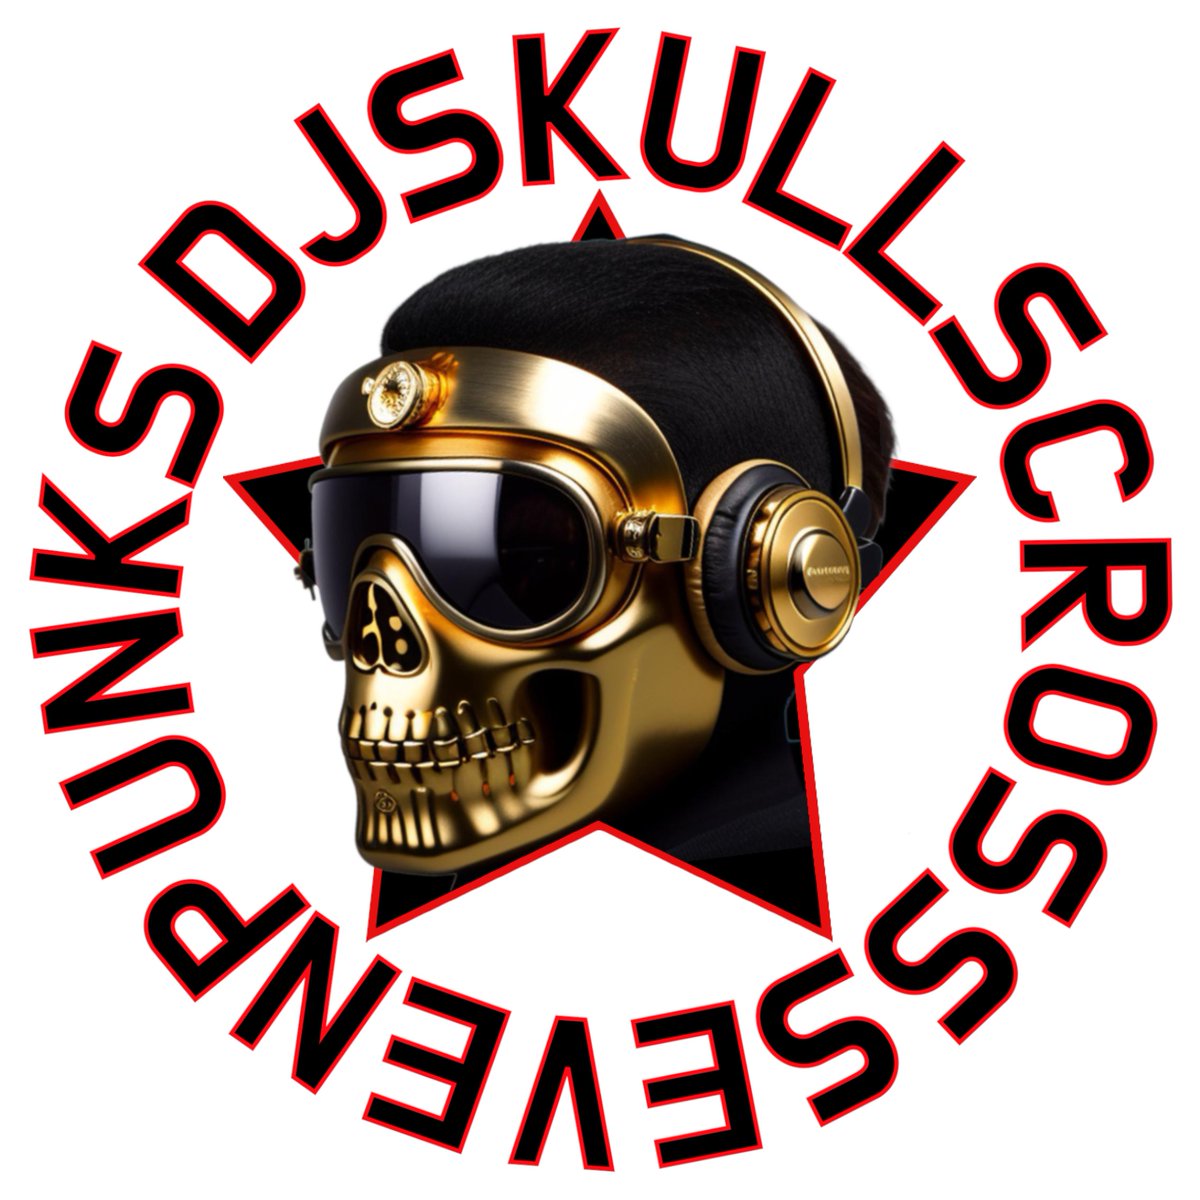 DJ Skulls 458
New Ver !
Check out suzuri!
For commercialization requests, please leave a comment
shop ▶ suzuri.jp/C7PUNKS

#nft #NFTart #nfts #nftGiveway #PFP #skull #skullart
#DJ #DJSkulls #objkt #objktcom #tezosart #AIart #nftshill #opensea #poligon #eth #Suzuri